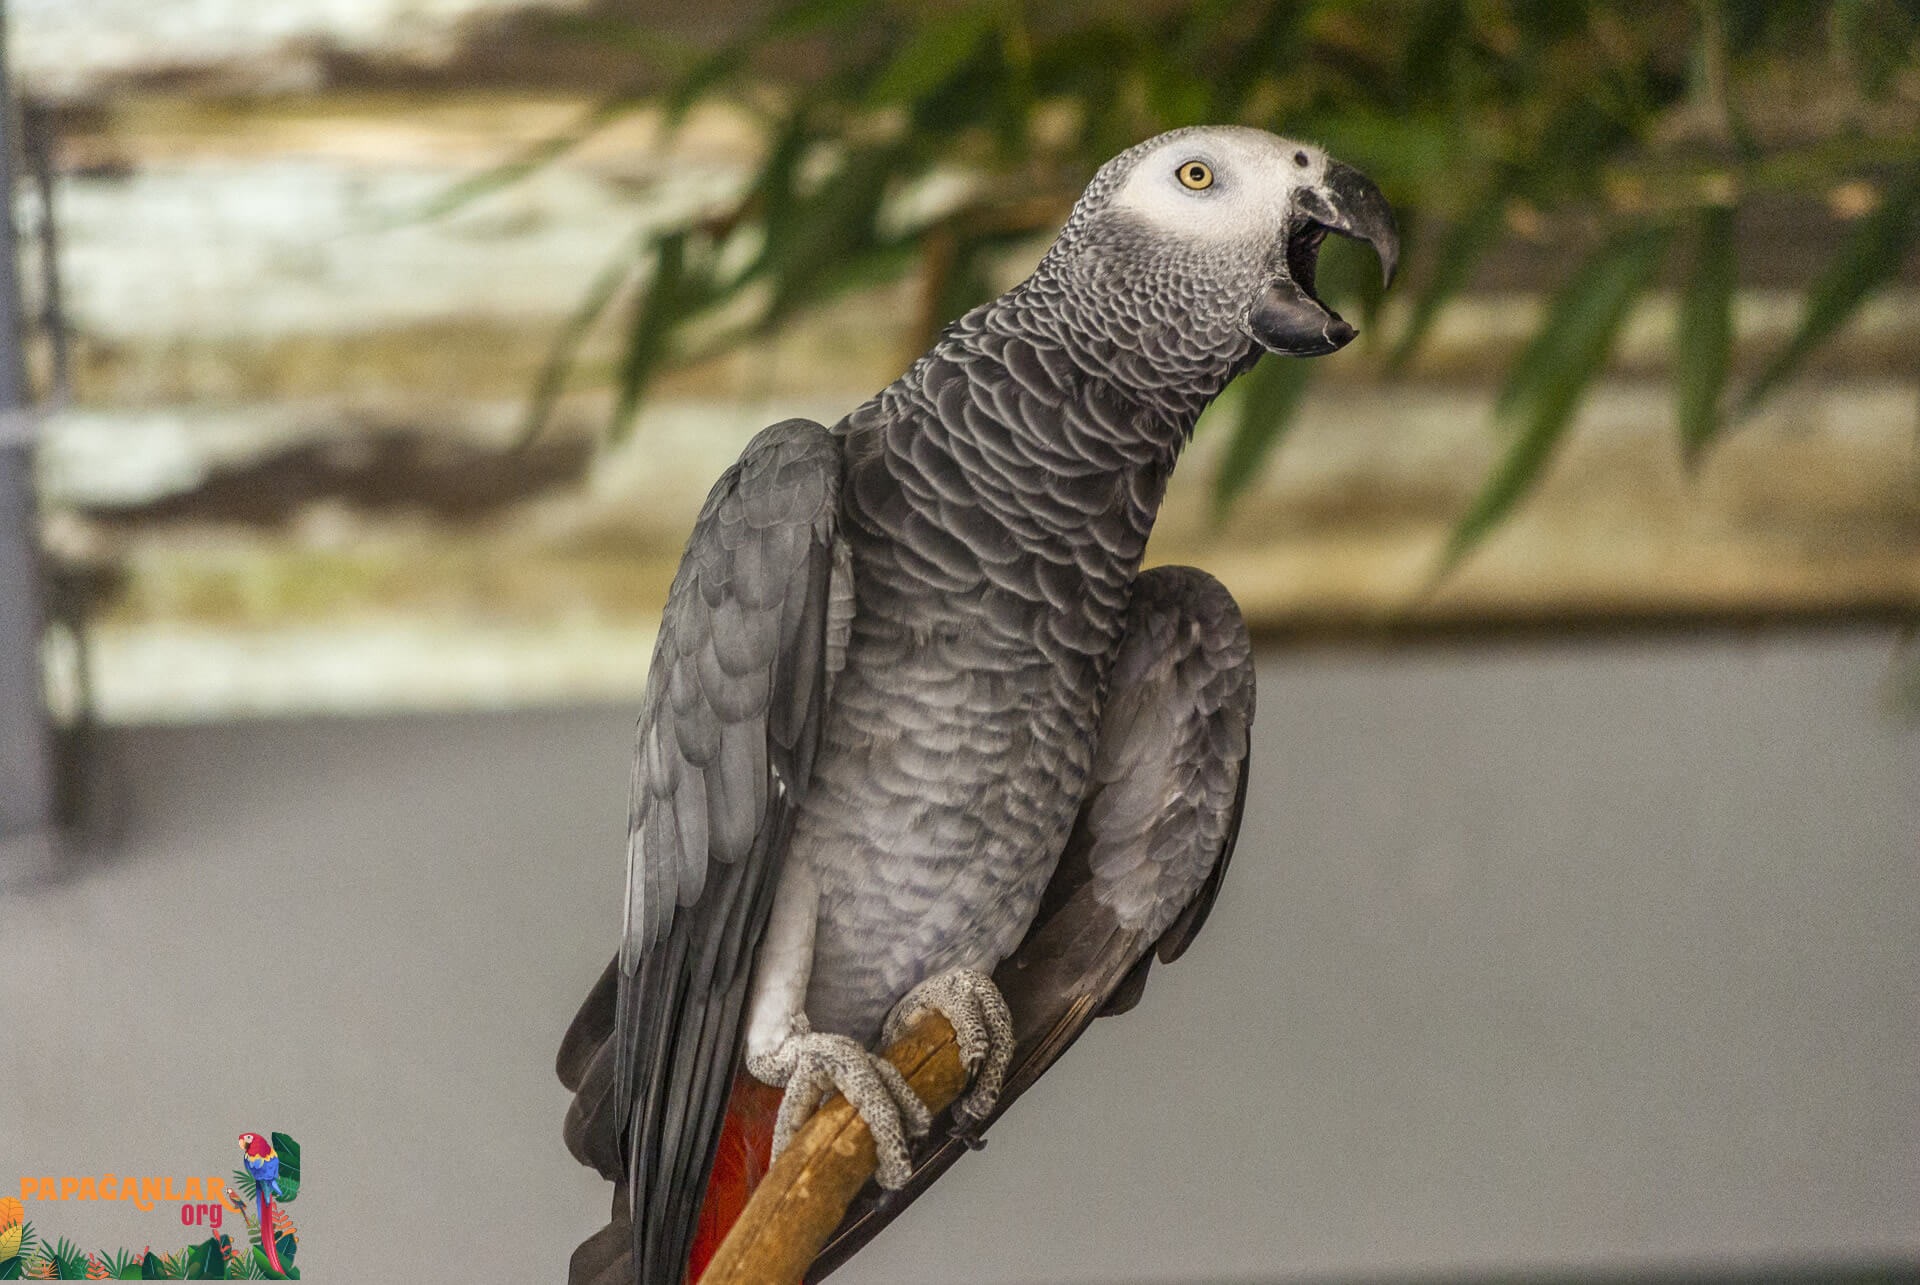 Jacoa Parrot Feathering